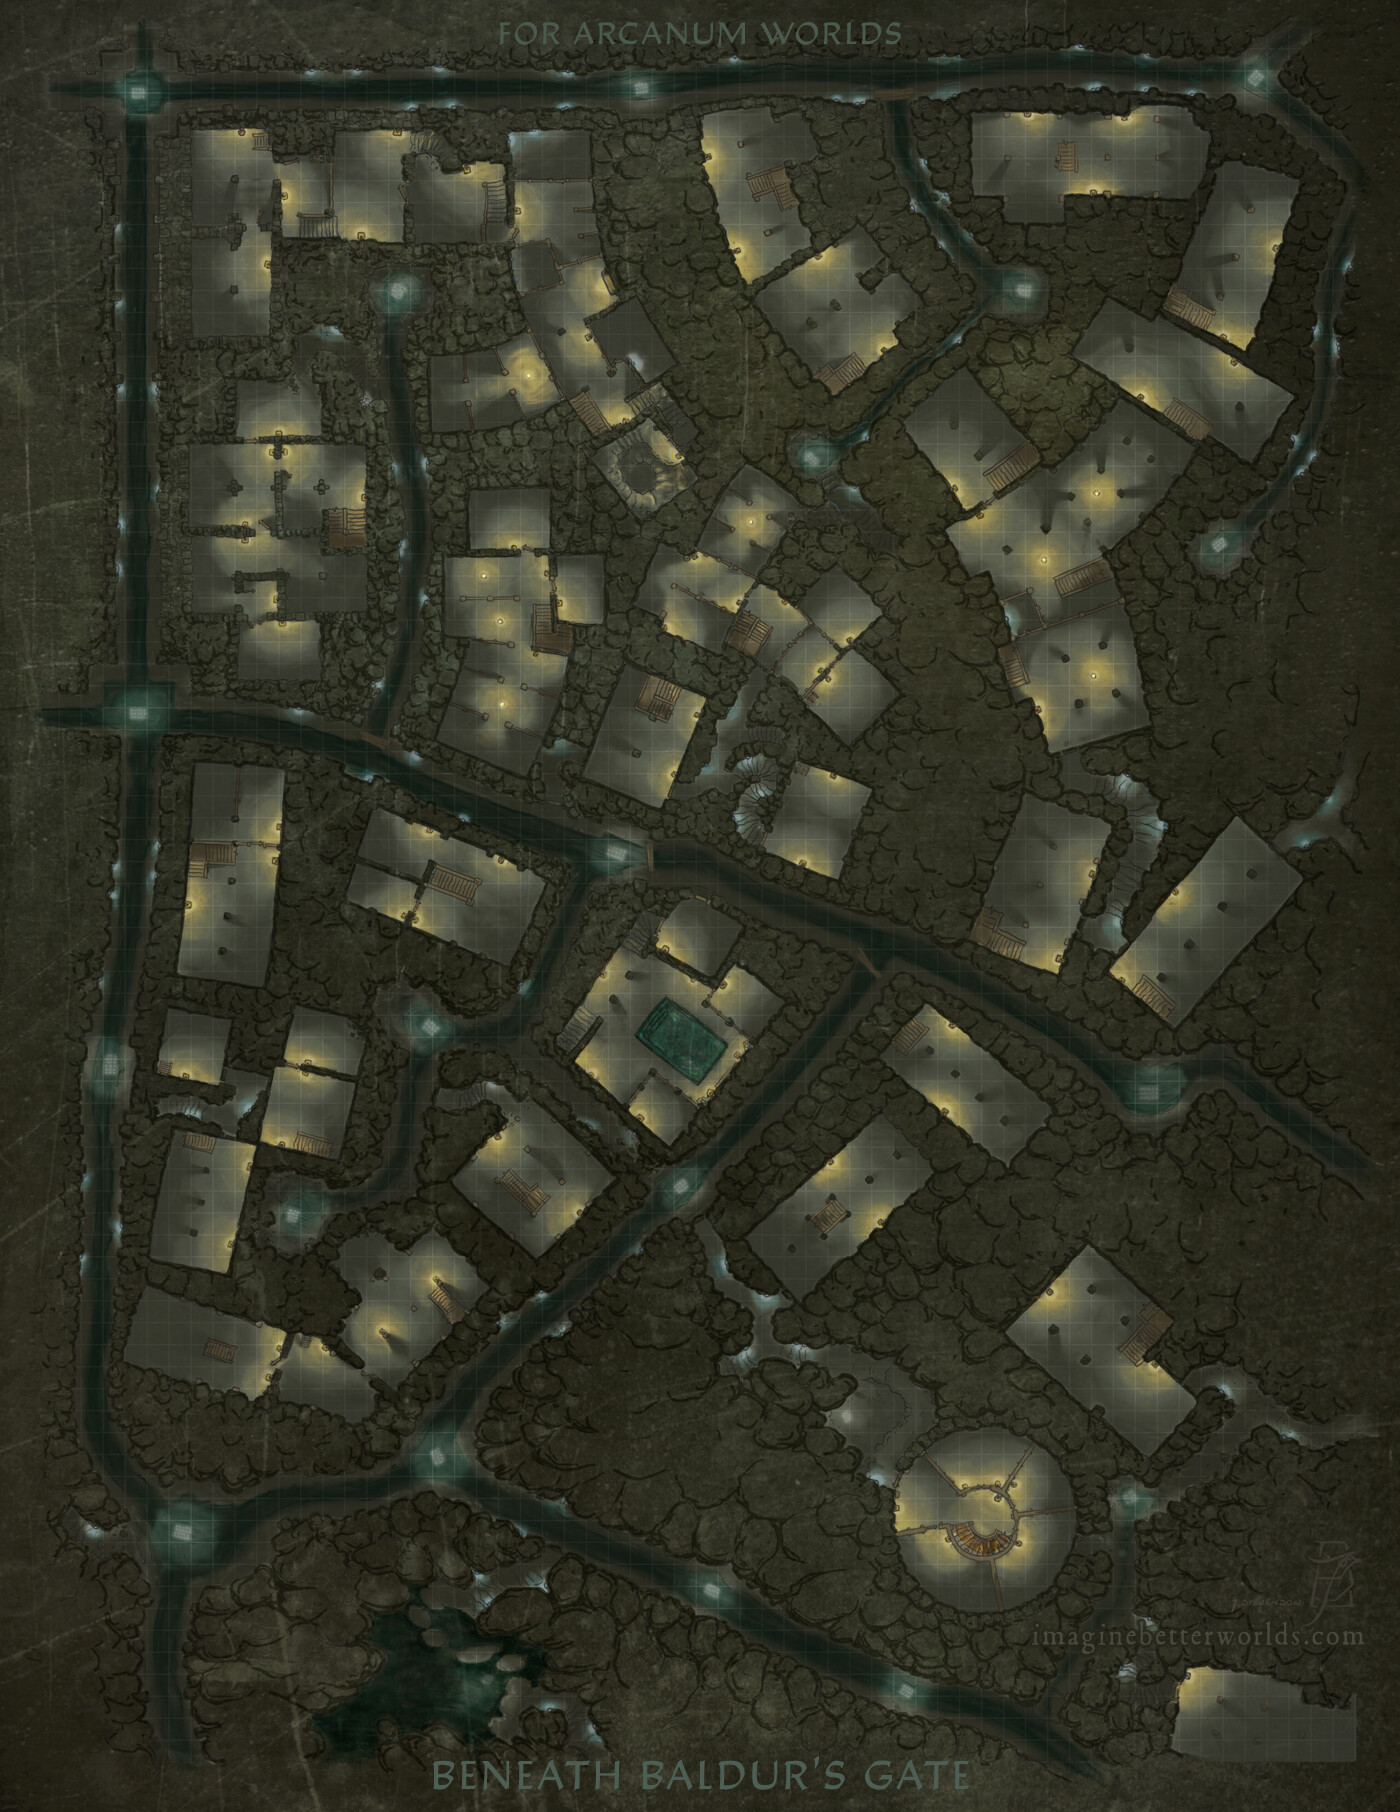 Baldur's Gate - street level encounters maps.